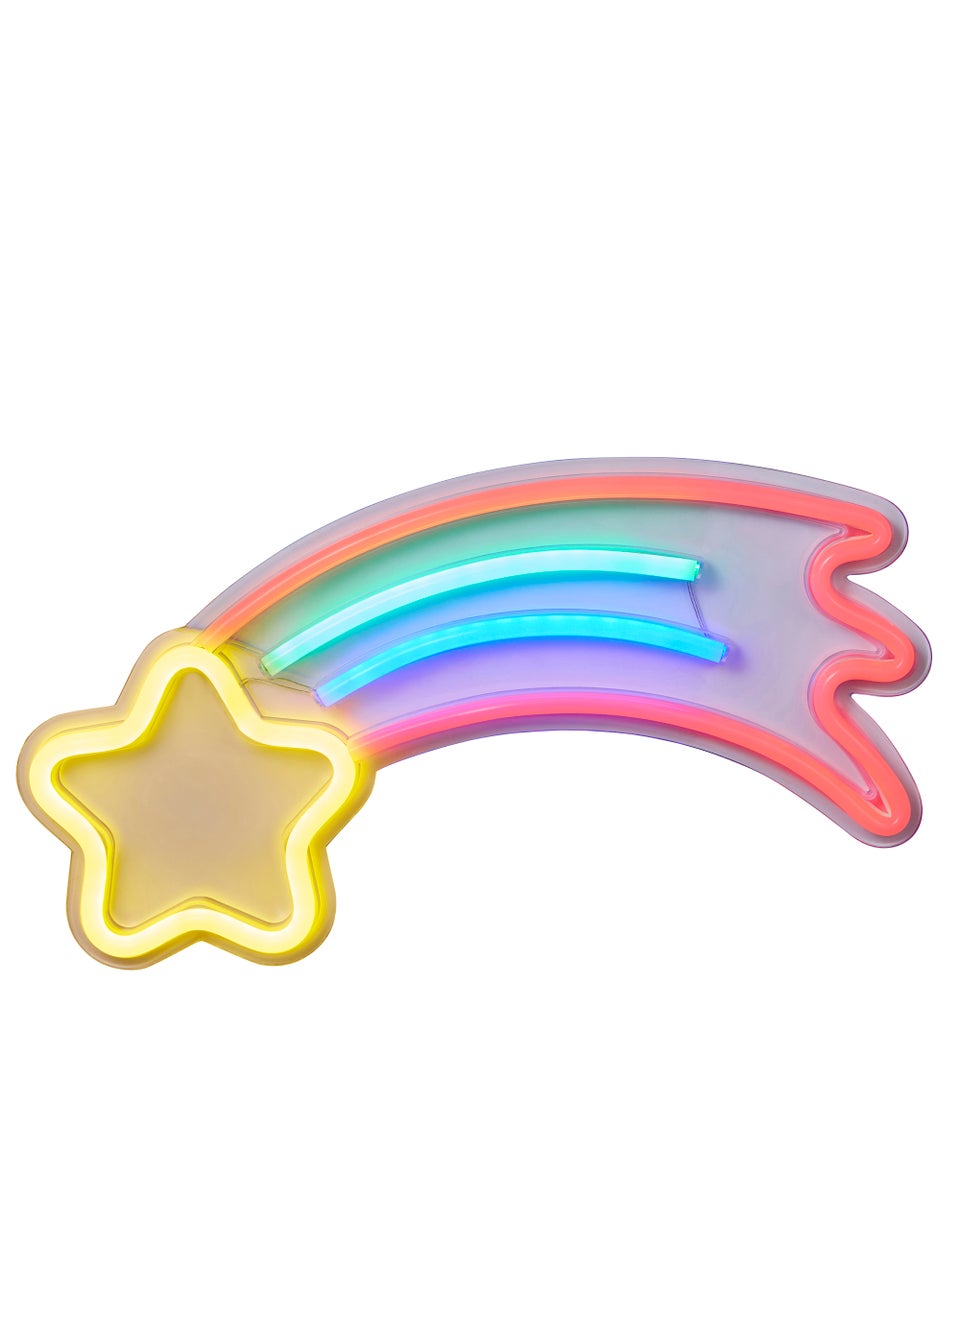 Glow Shooting Star Neon Light (20cm x 40.5cm x 2cm)